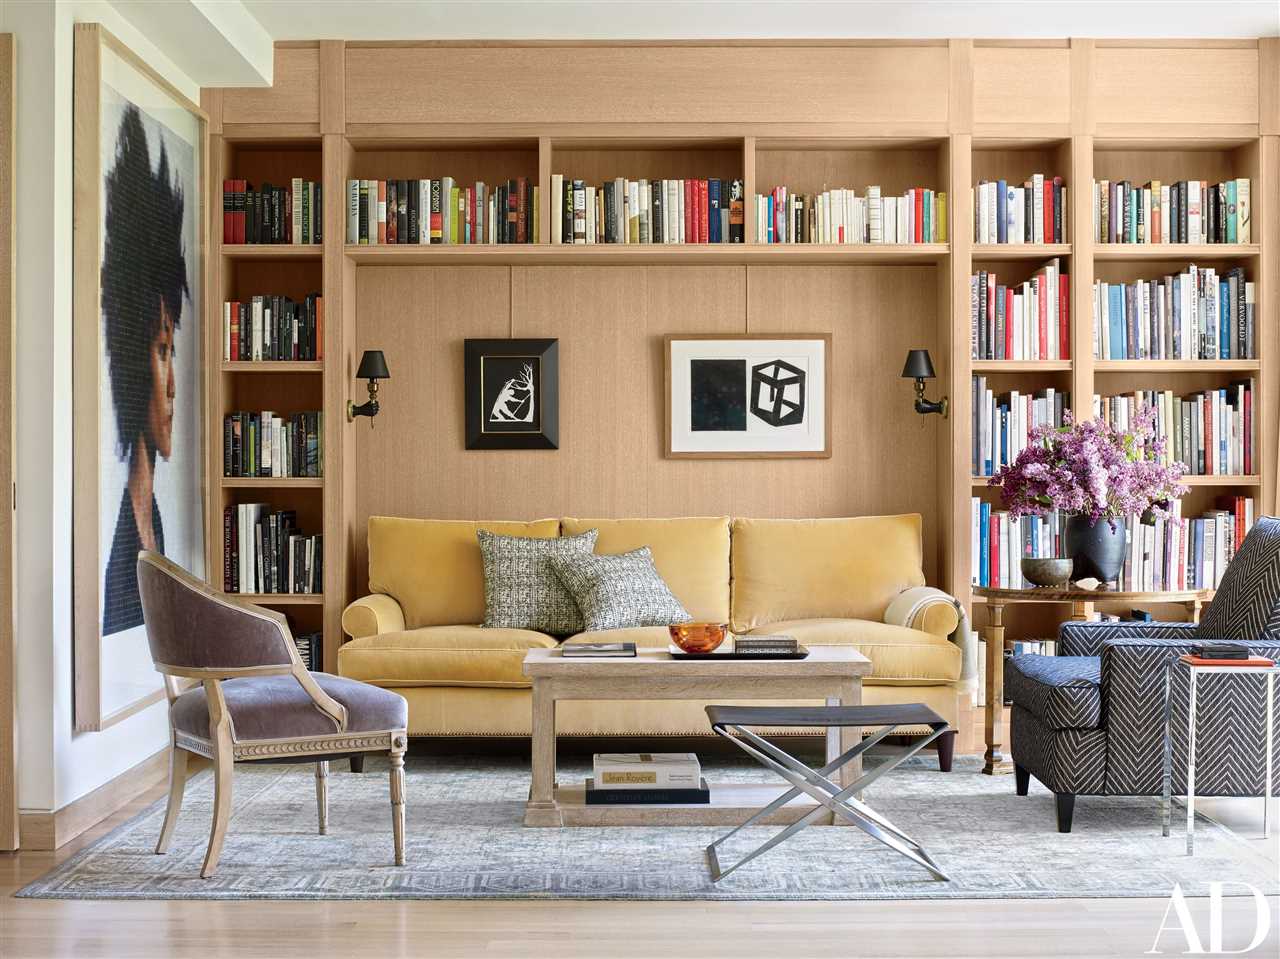 Organize Your Office with a Stylish Bookshelf | Office Bookshelf Ideas